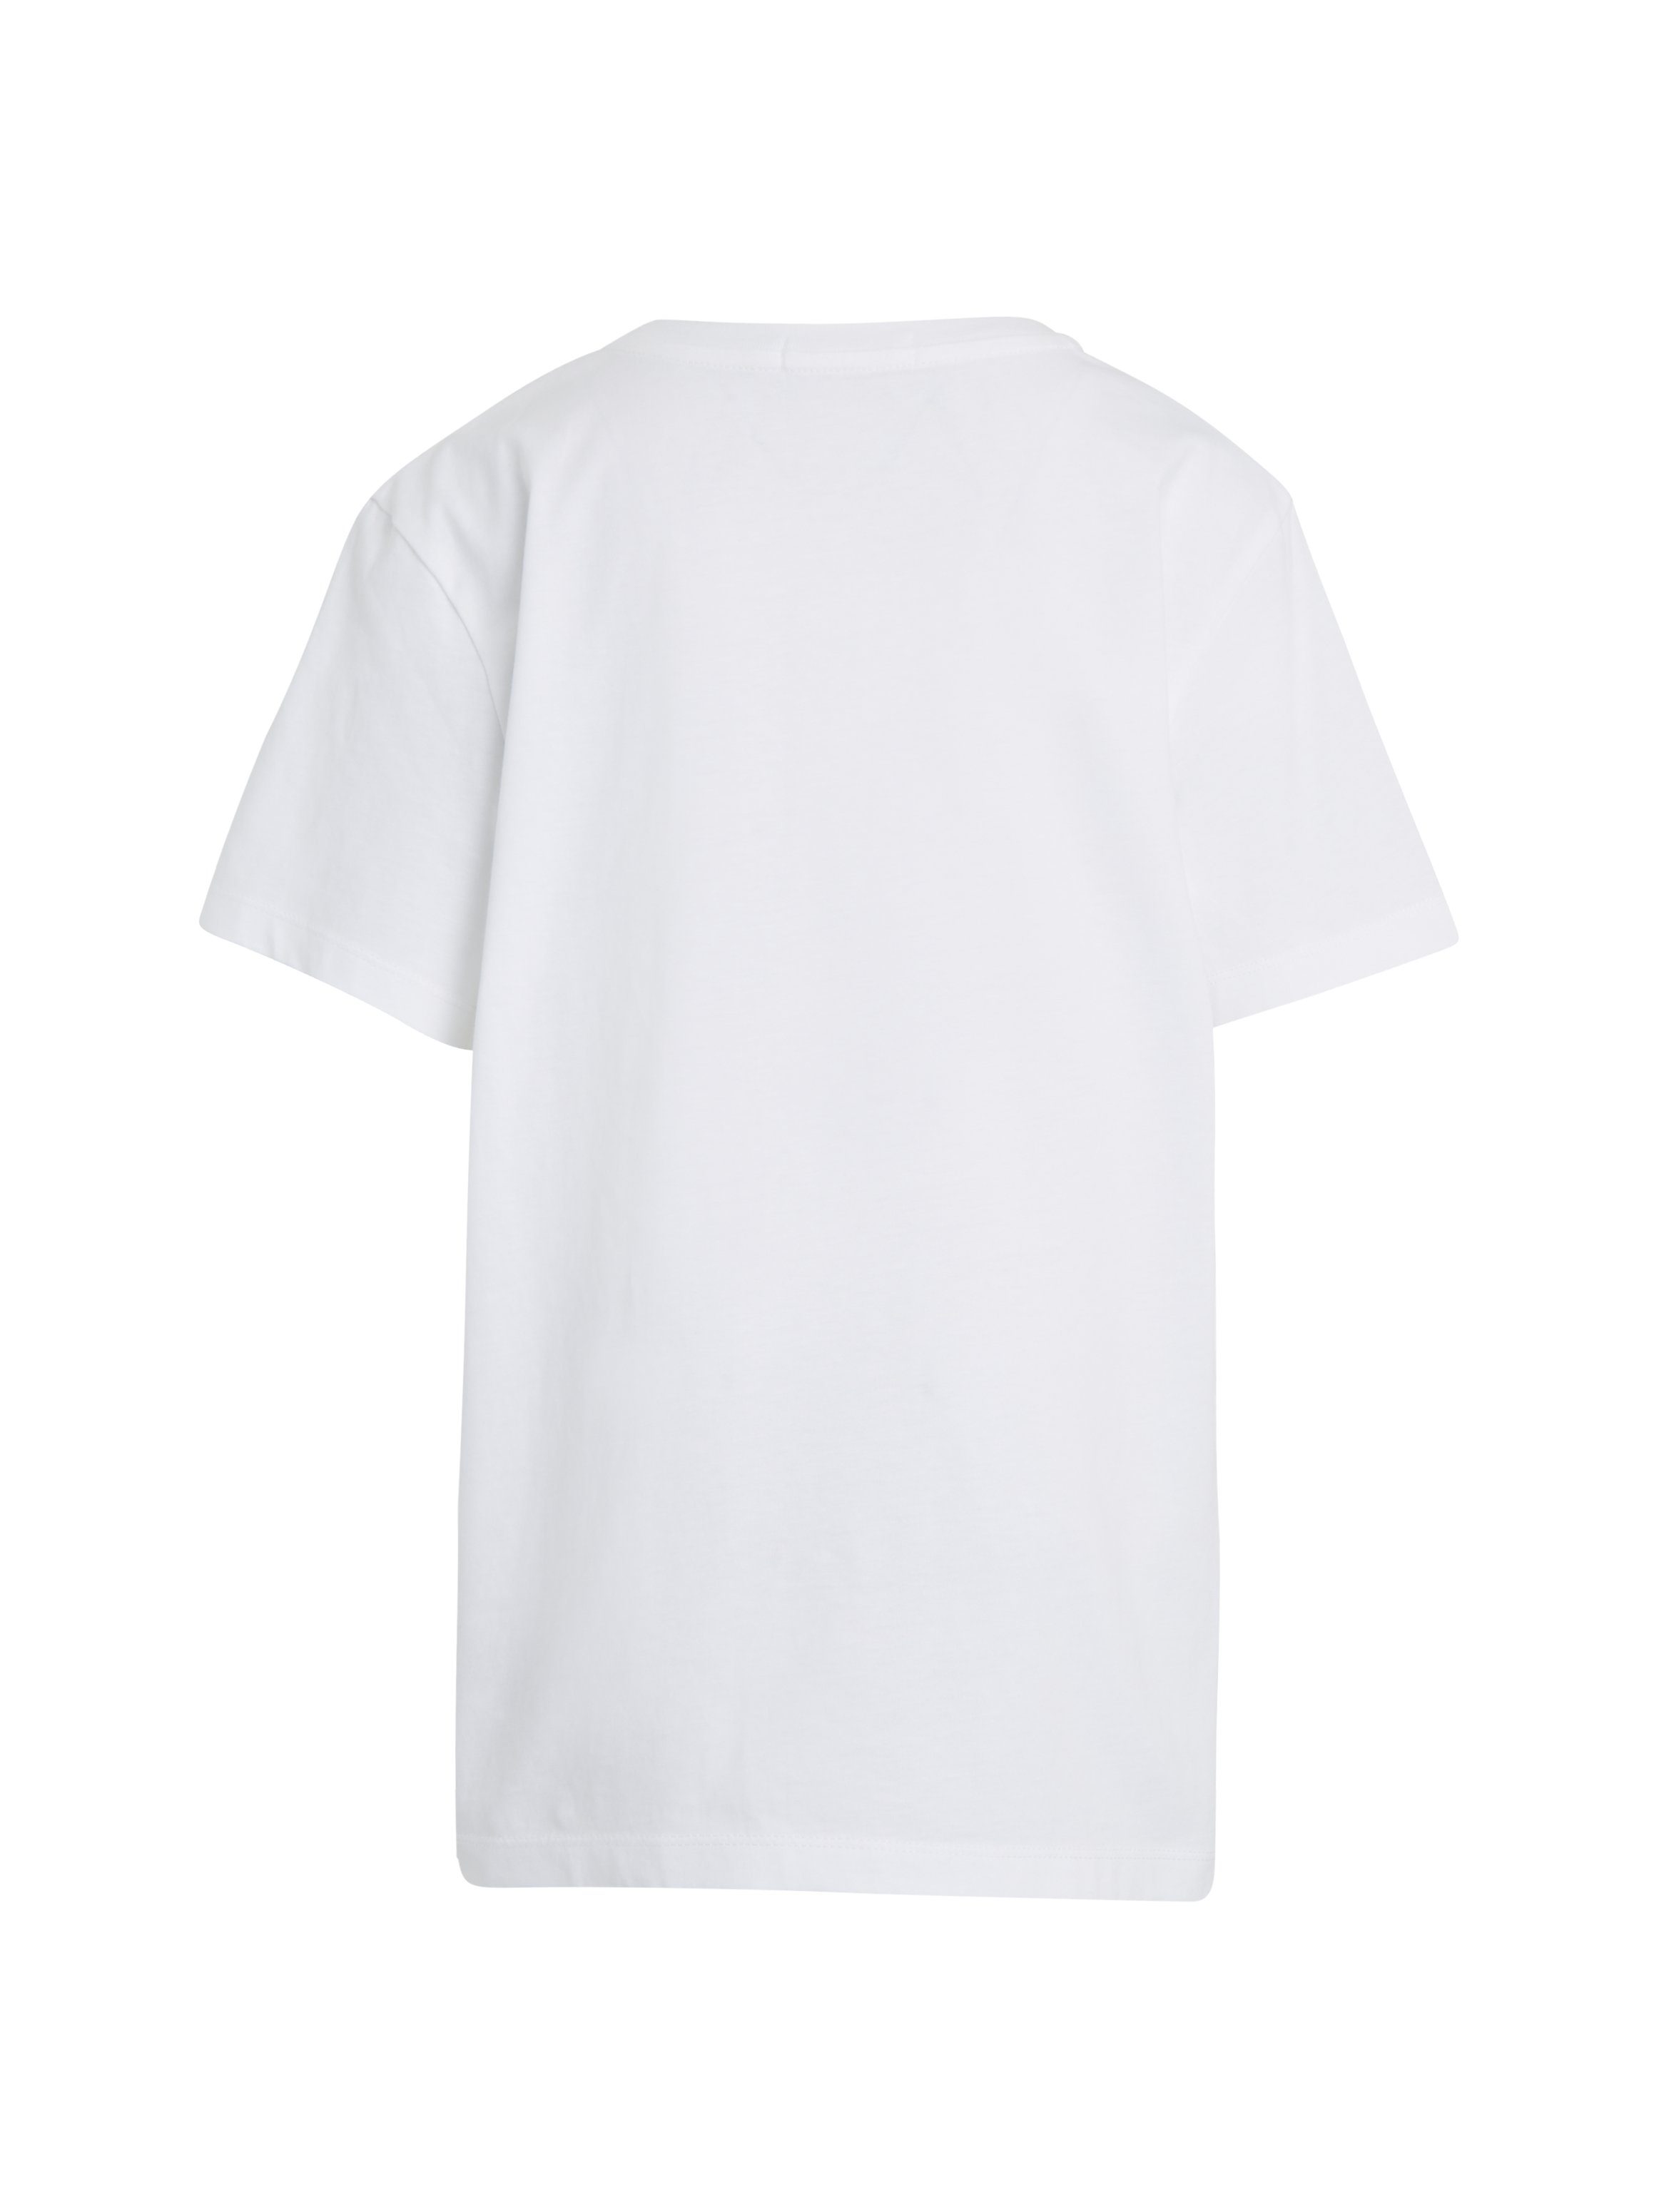 Calvin Klein Jeans Bright MONOGRAM CHEST White T-Shirt TOP